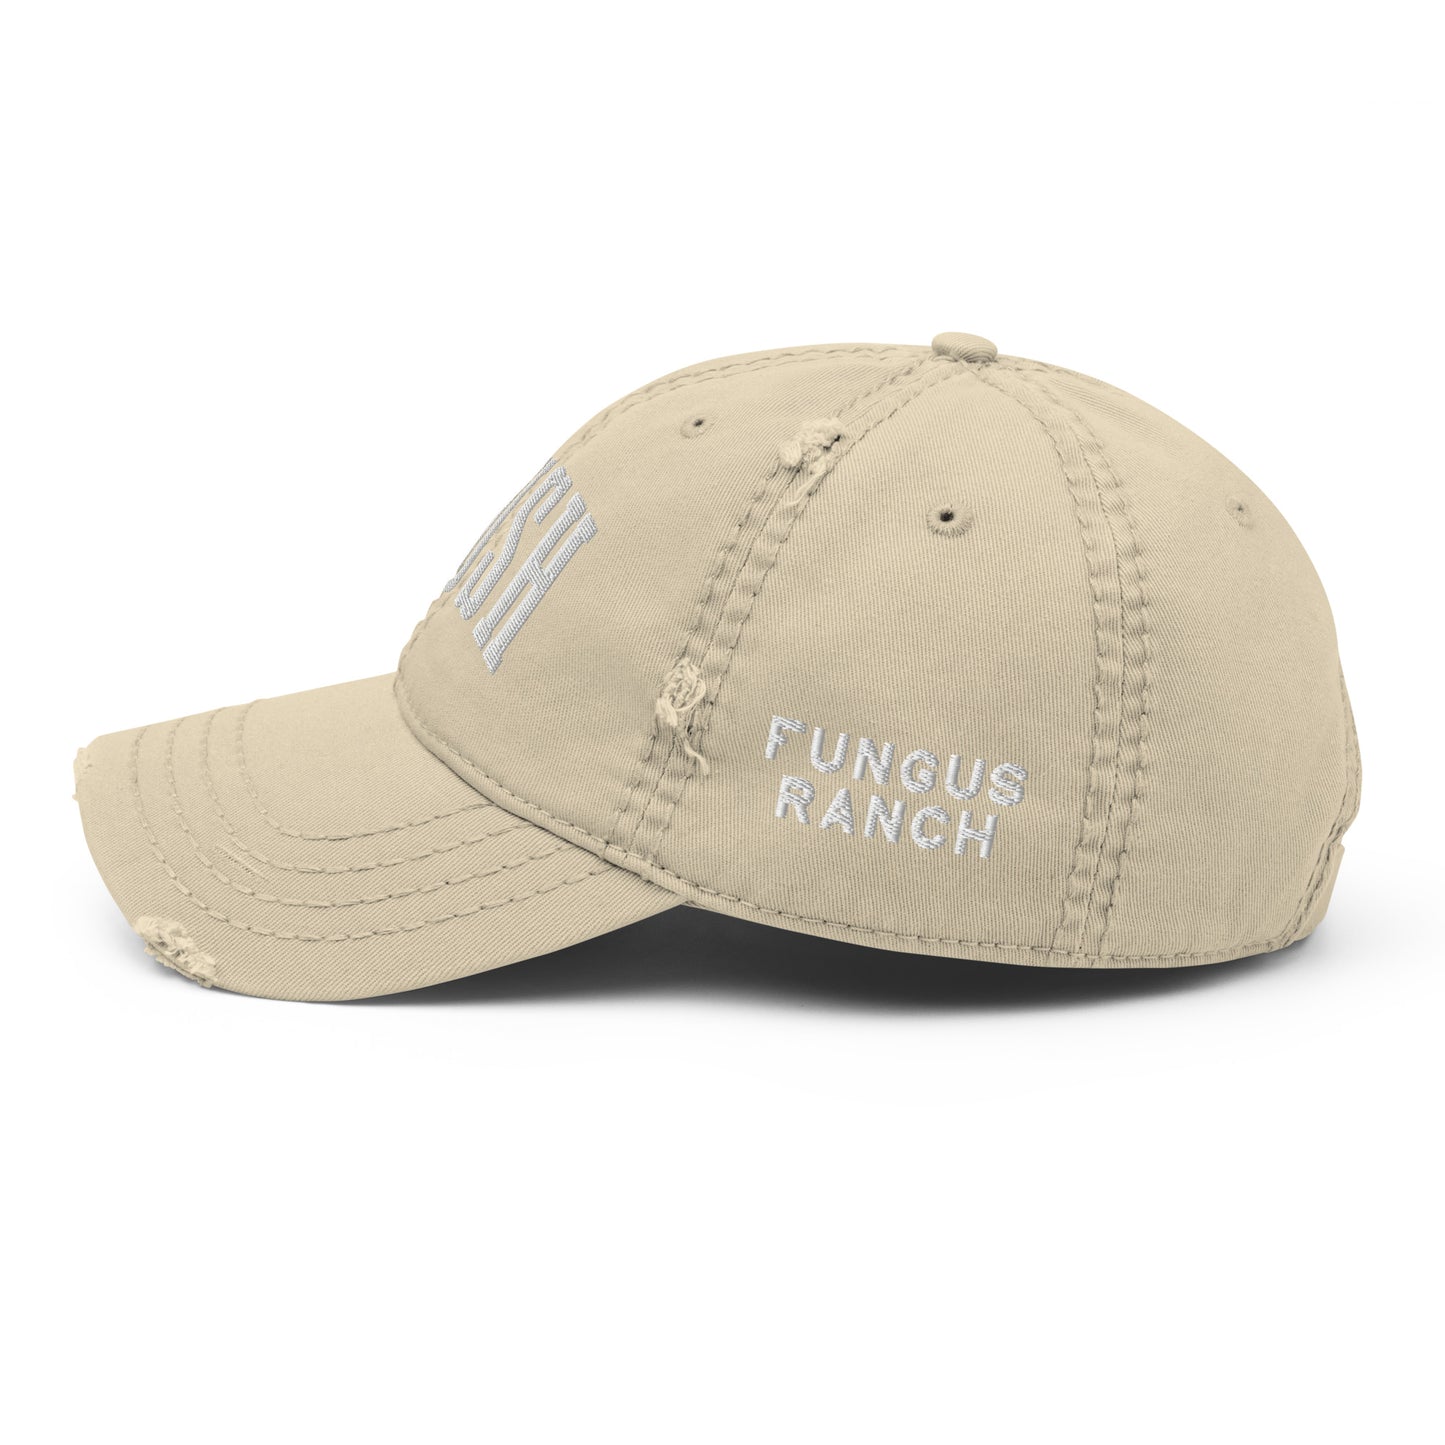 MUSH University - Distressed Dad Hat (White Stitching)